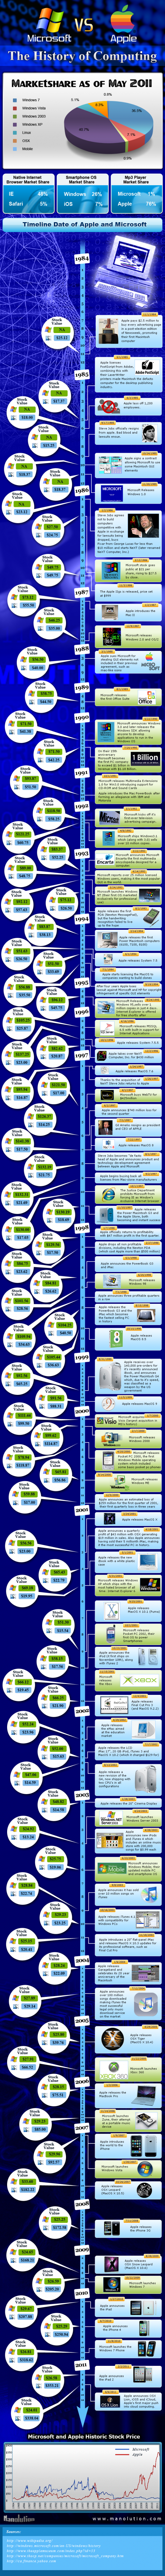 history-of-computing-full